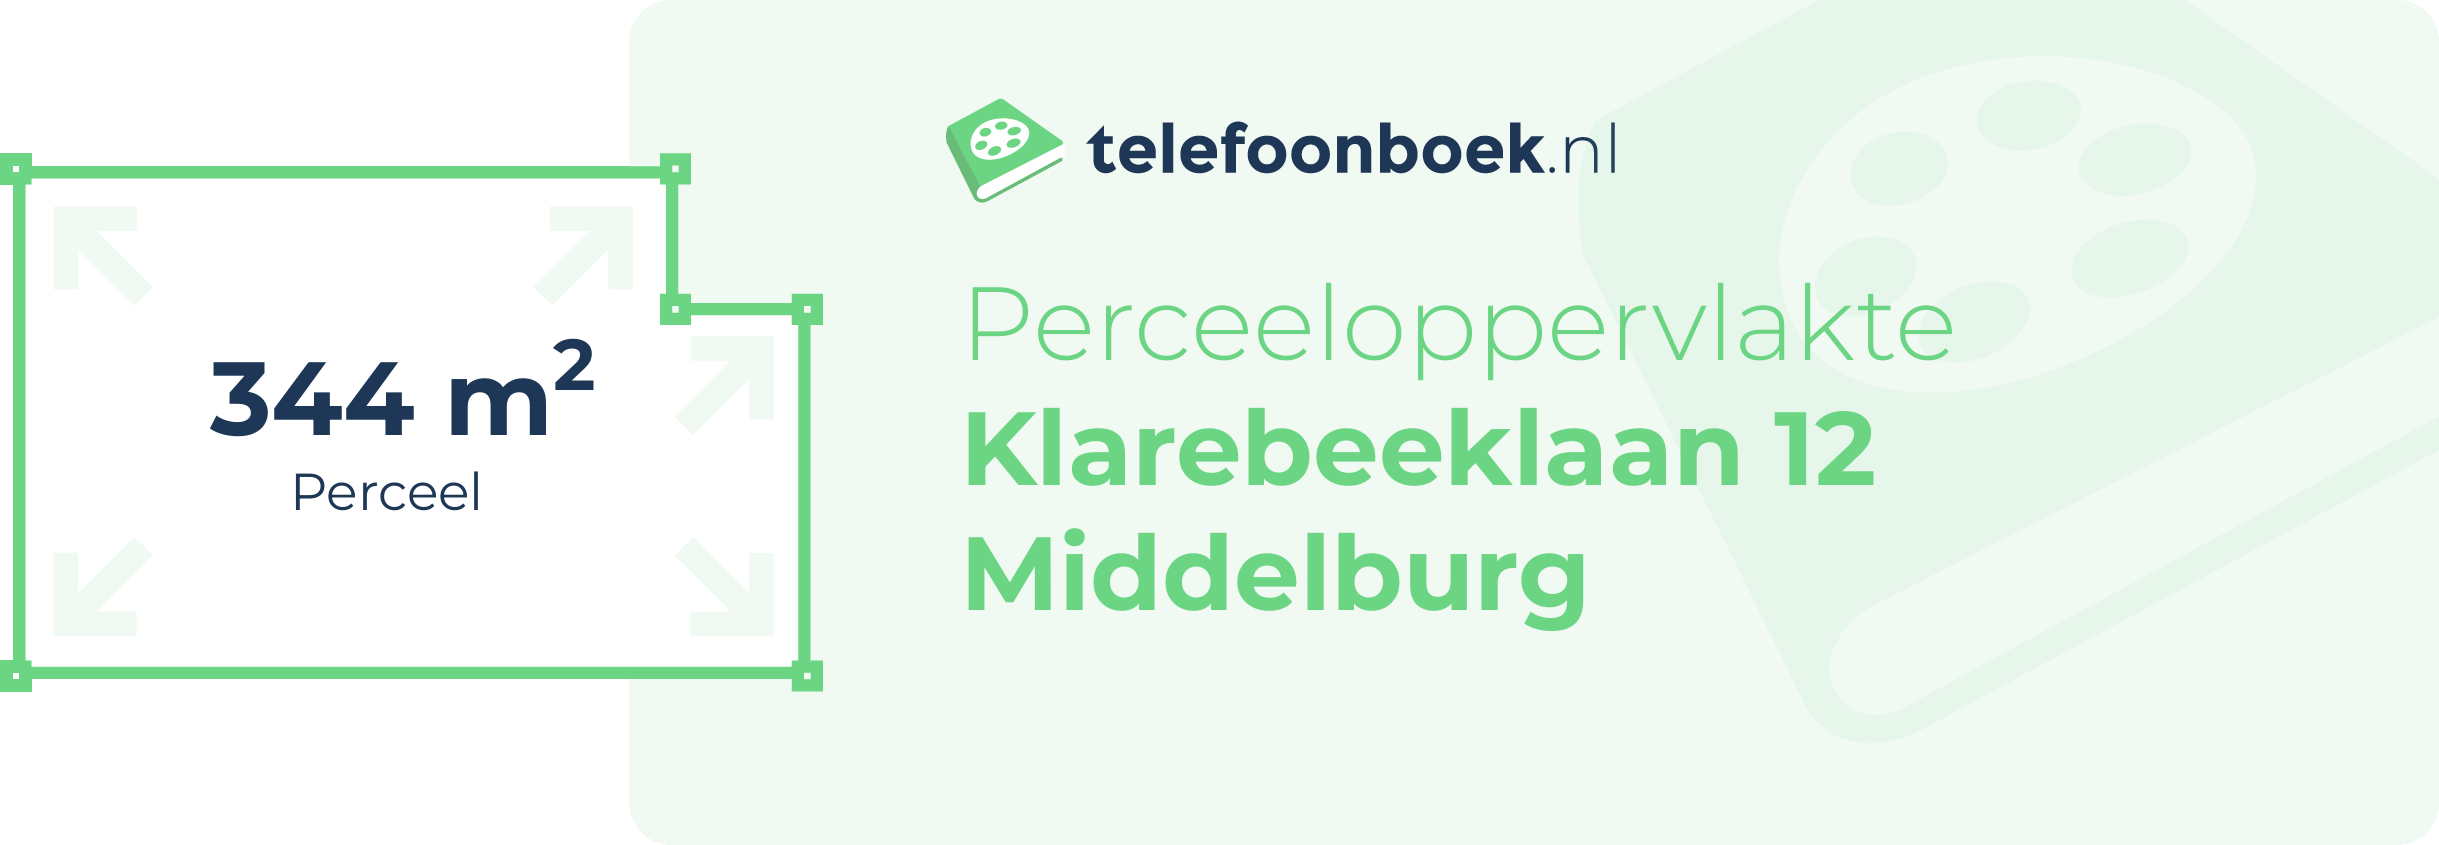 Perceeloppervlakte Klarebeeklaan 12 Middelburg